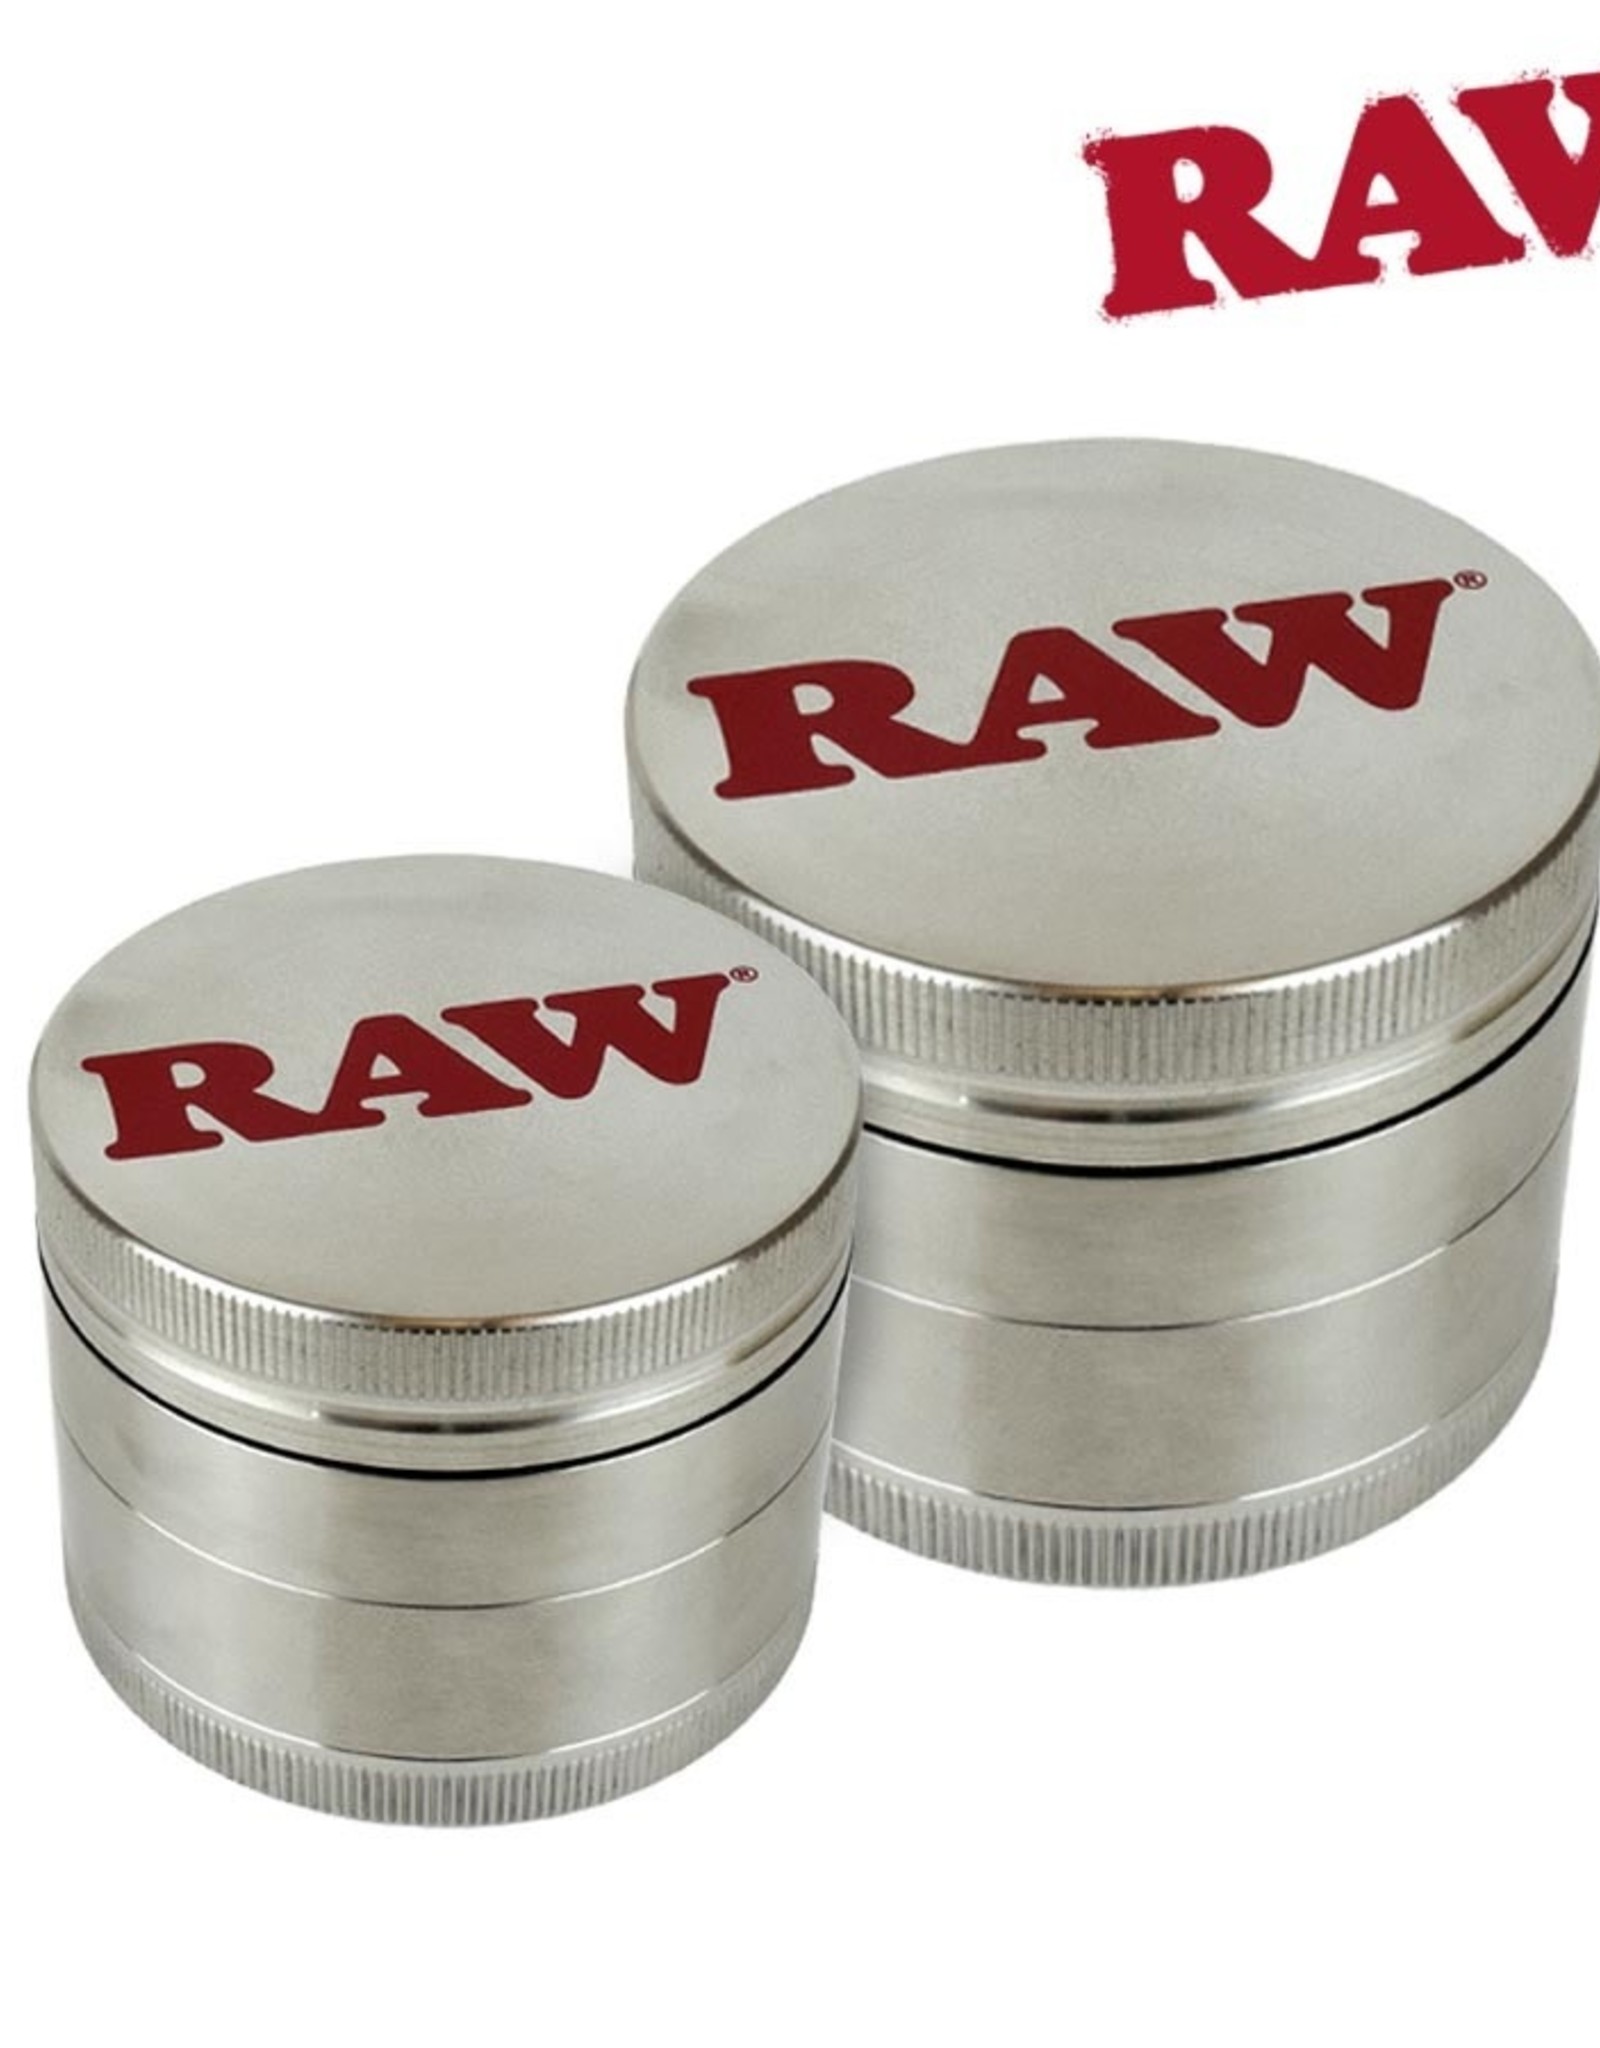 RAW RAW Stainless Steel 4 Piece Grinder